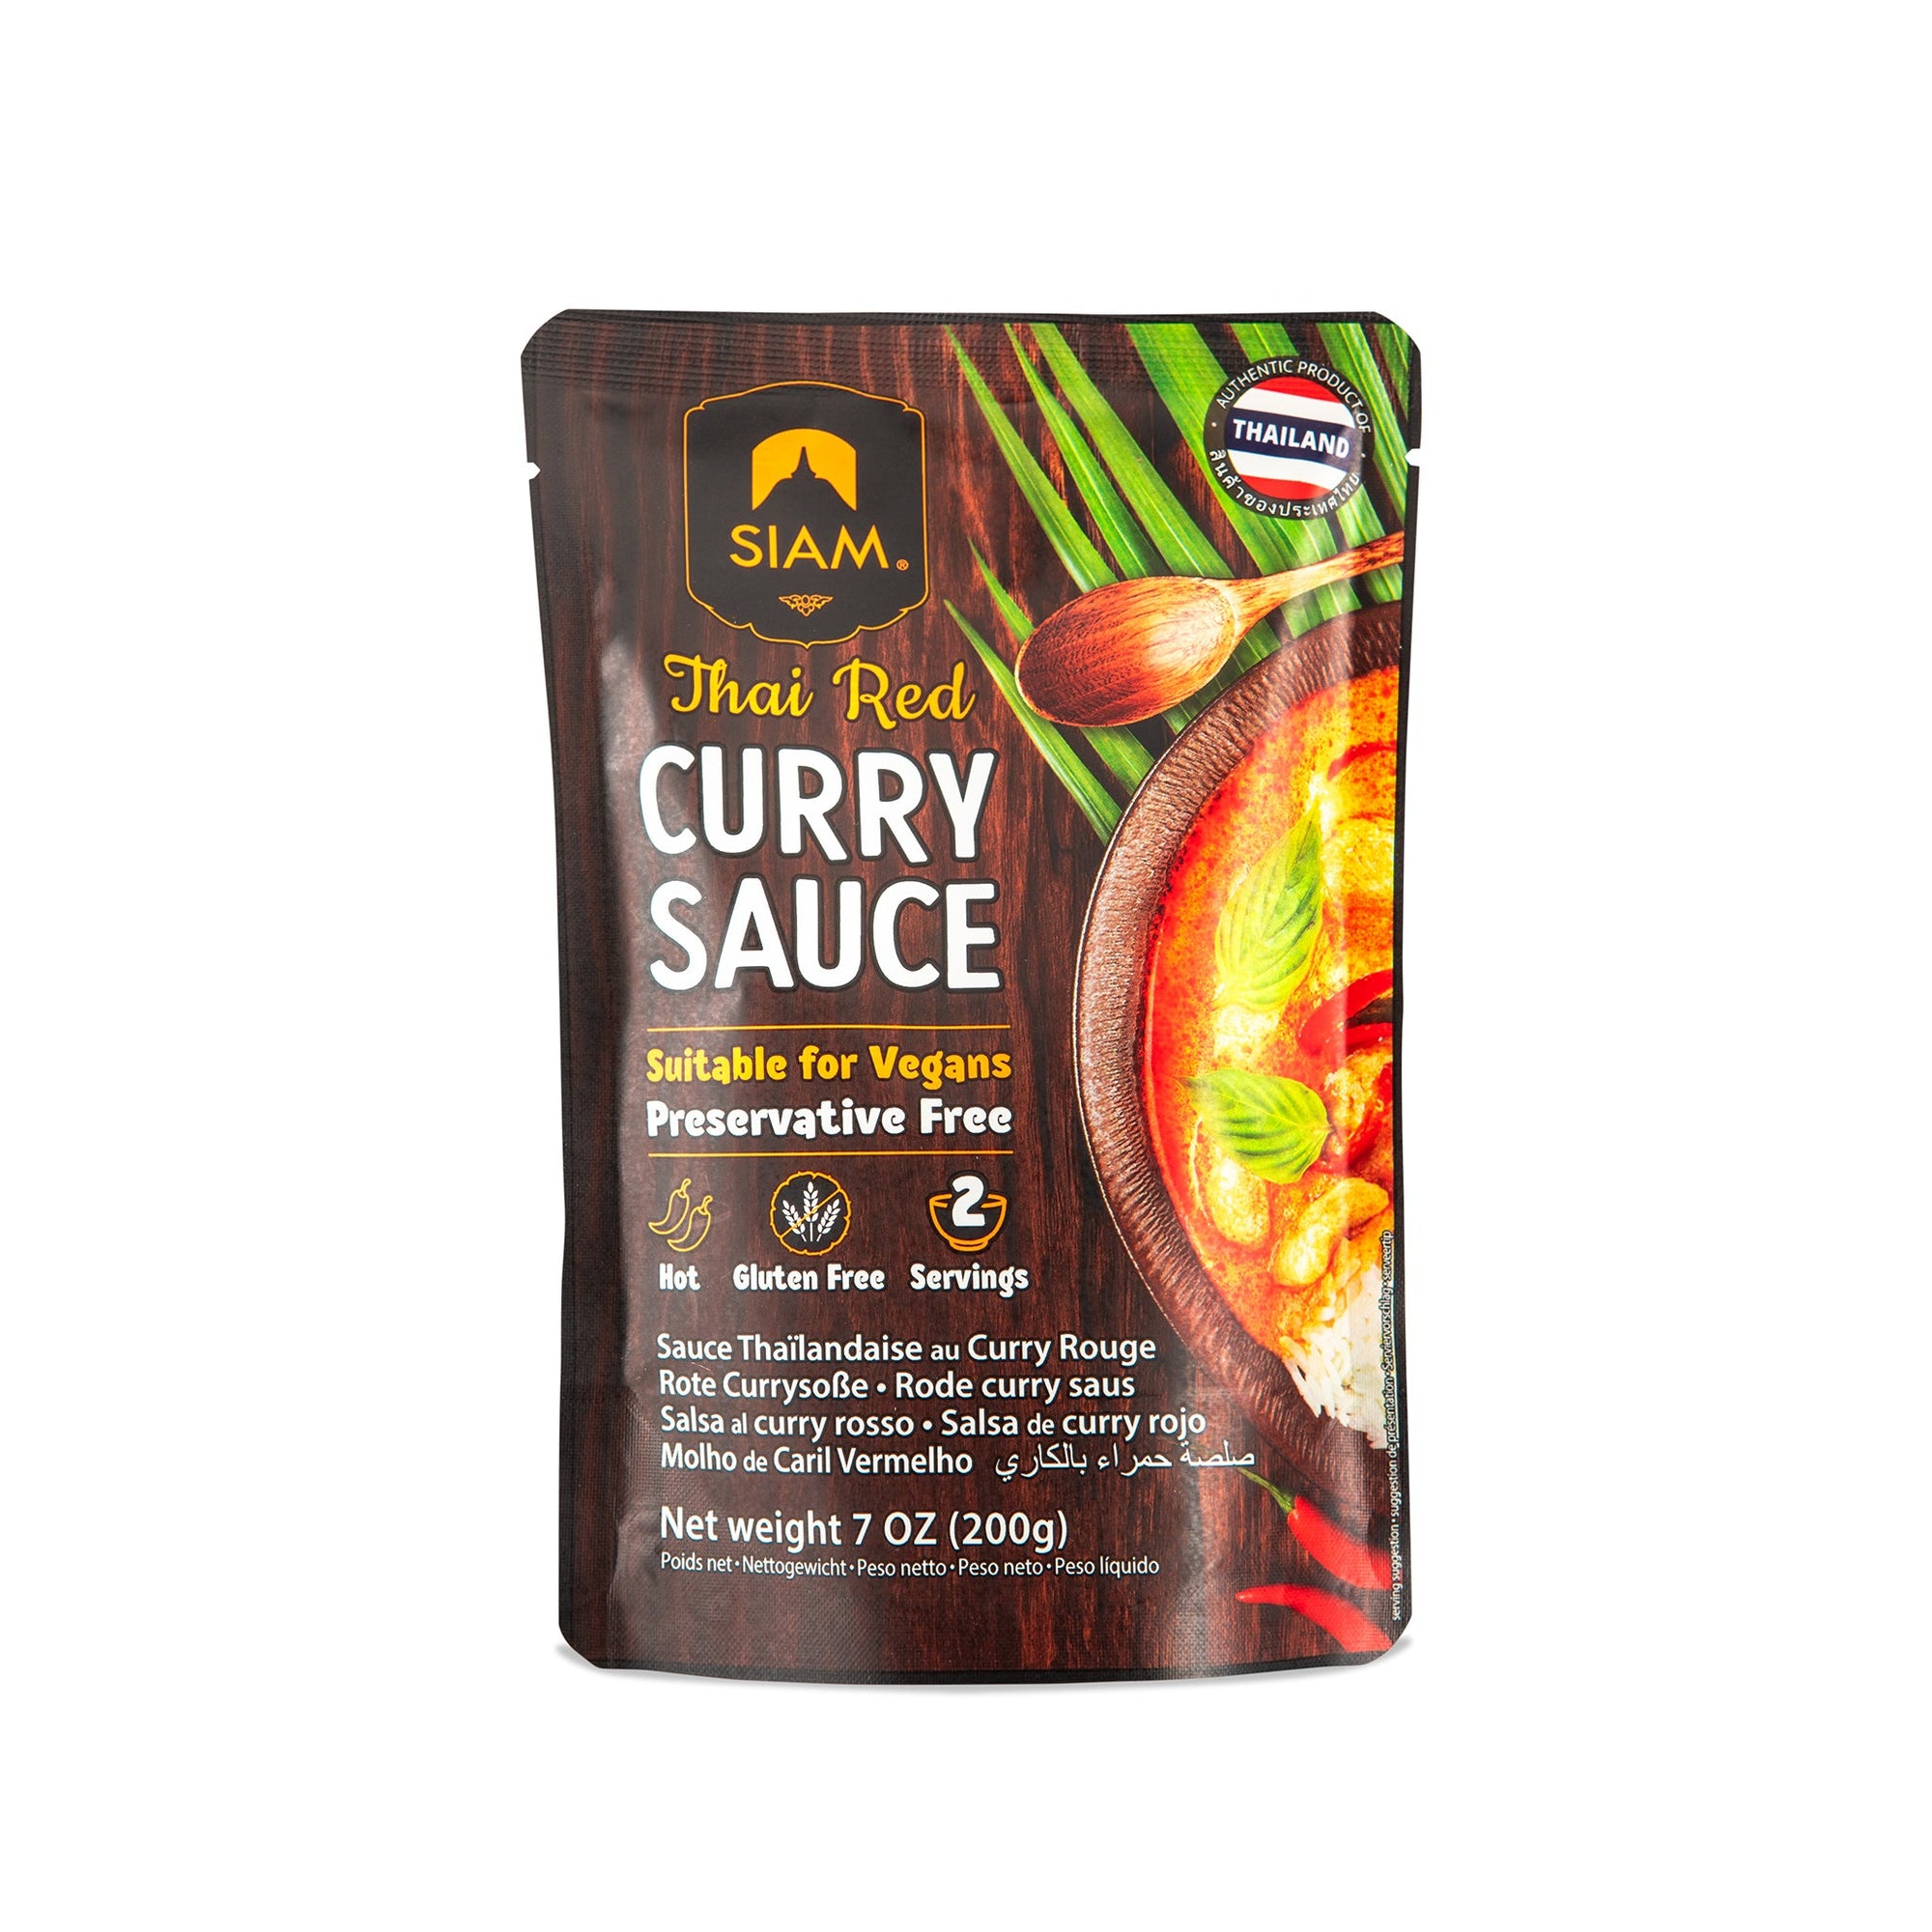 SIAM Red Thai Curry Sauce, 7 oz (200g)